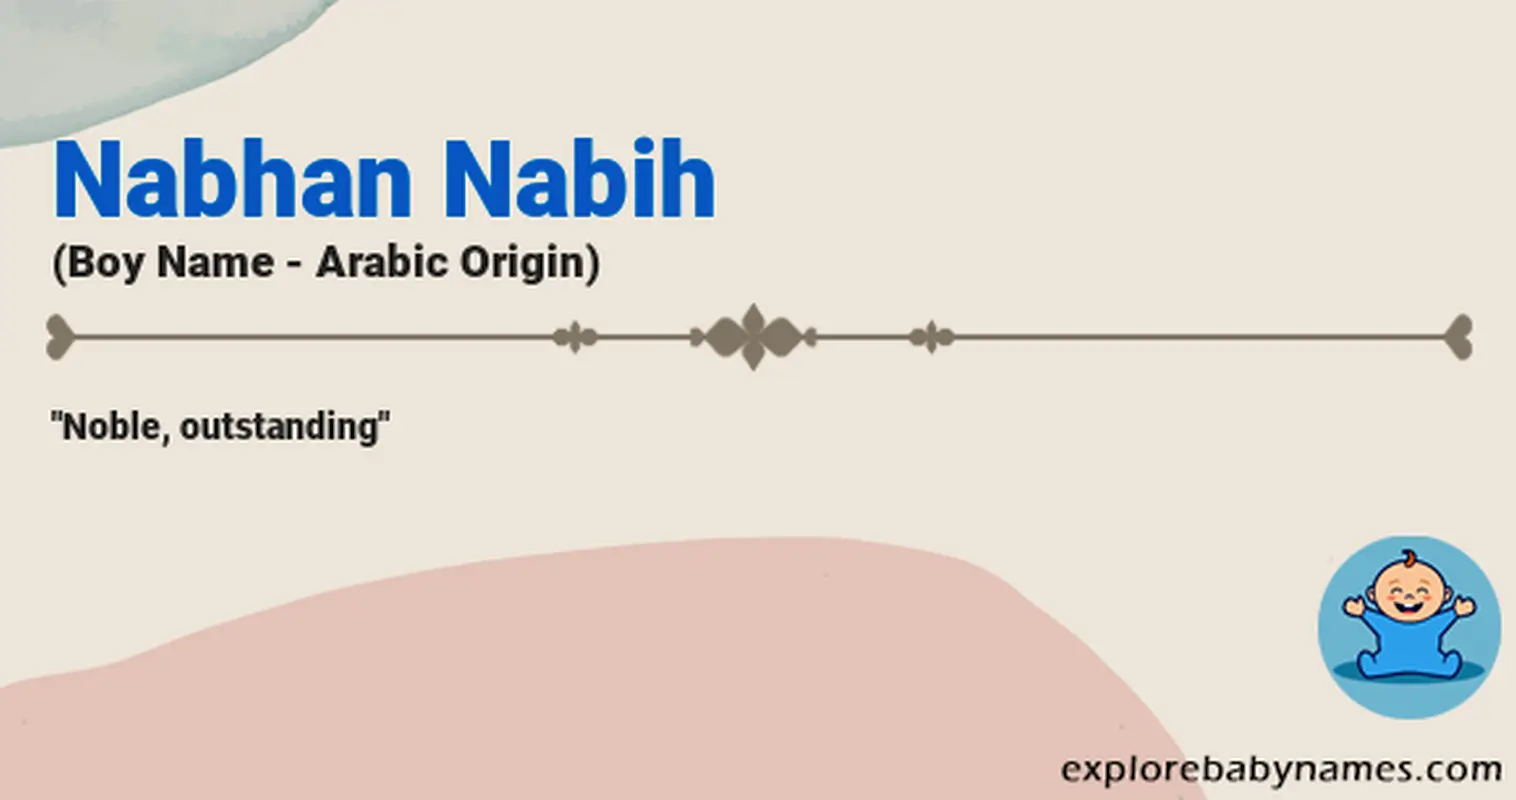 Meaning of Nabhan Nabih